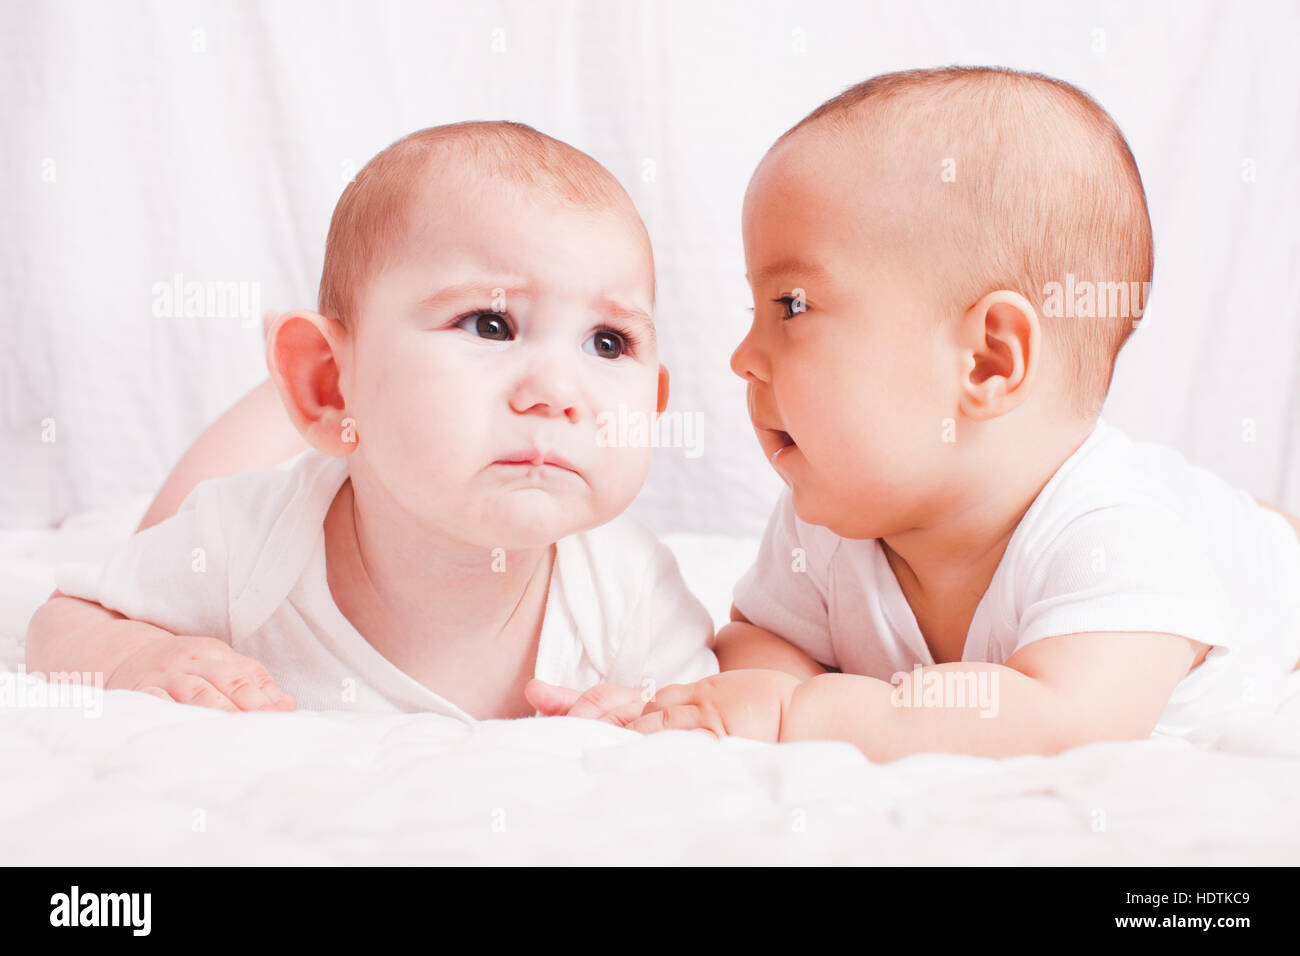 Babies talking, humor Stock Photo